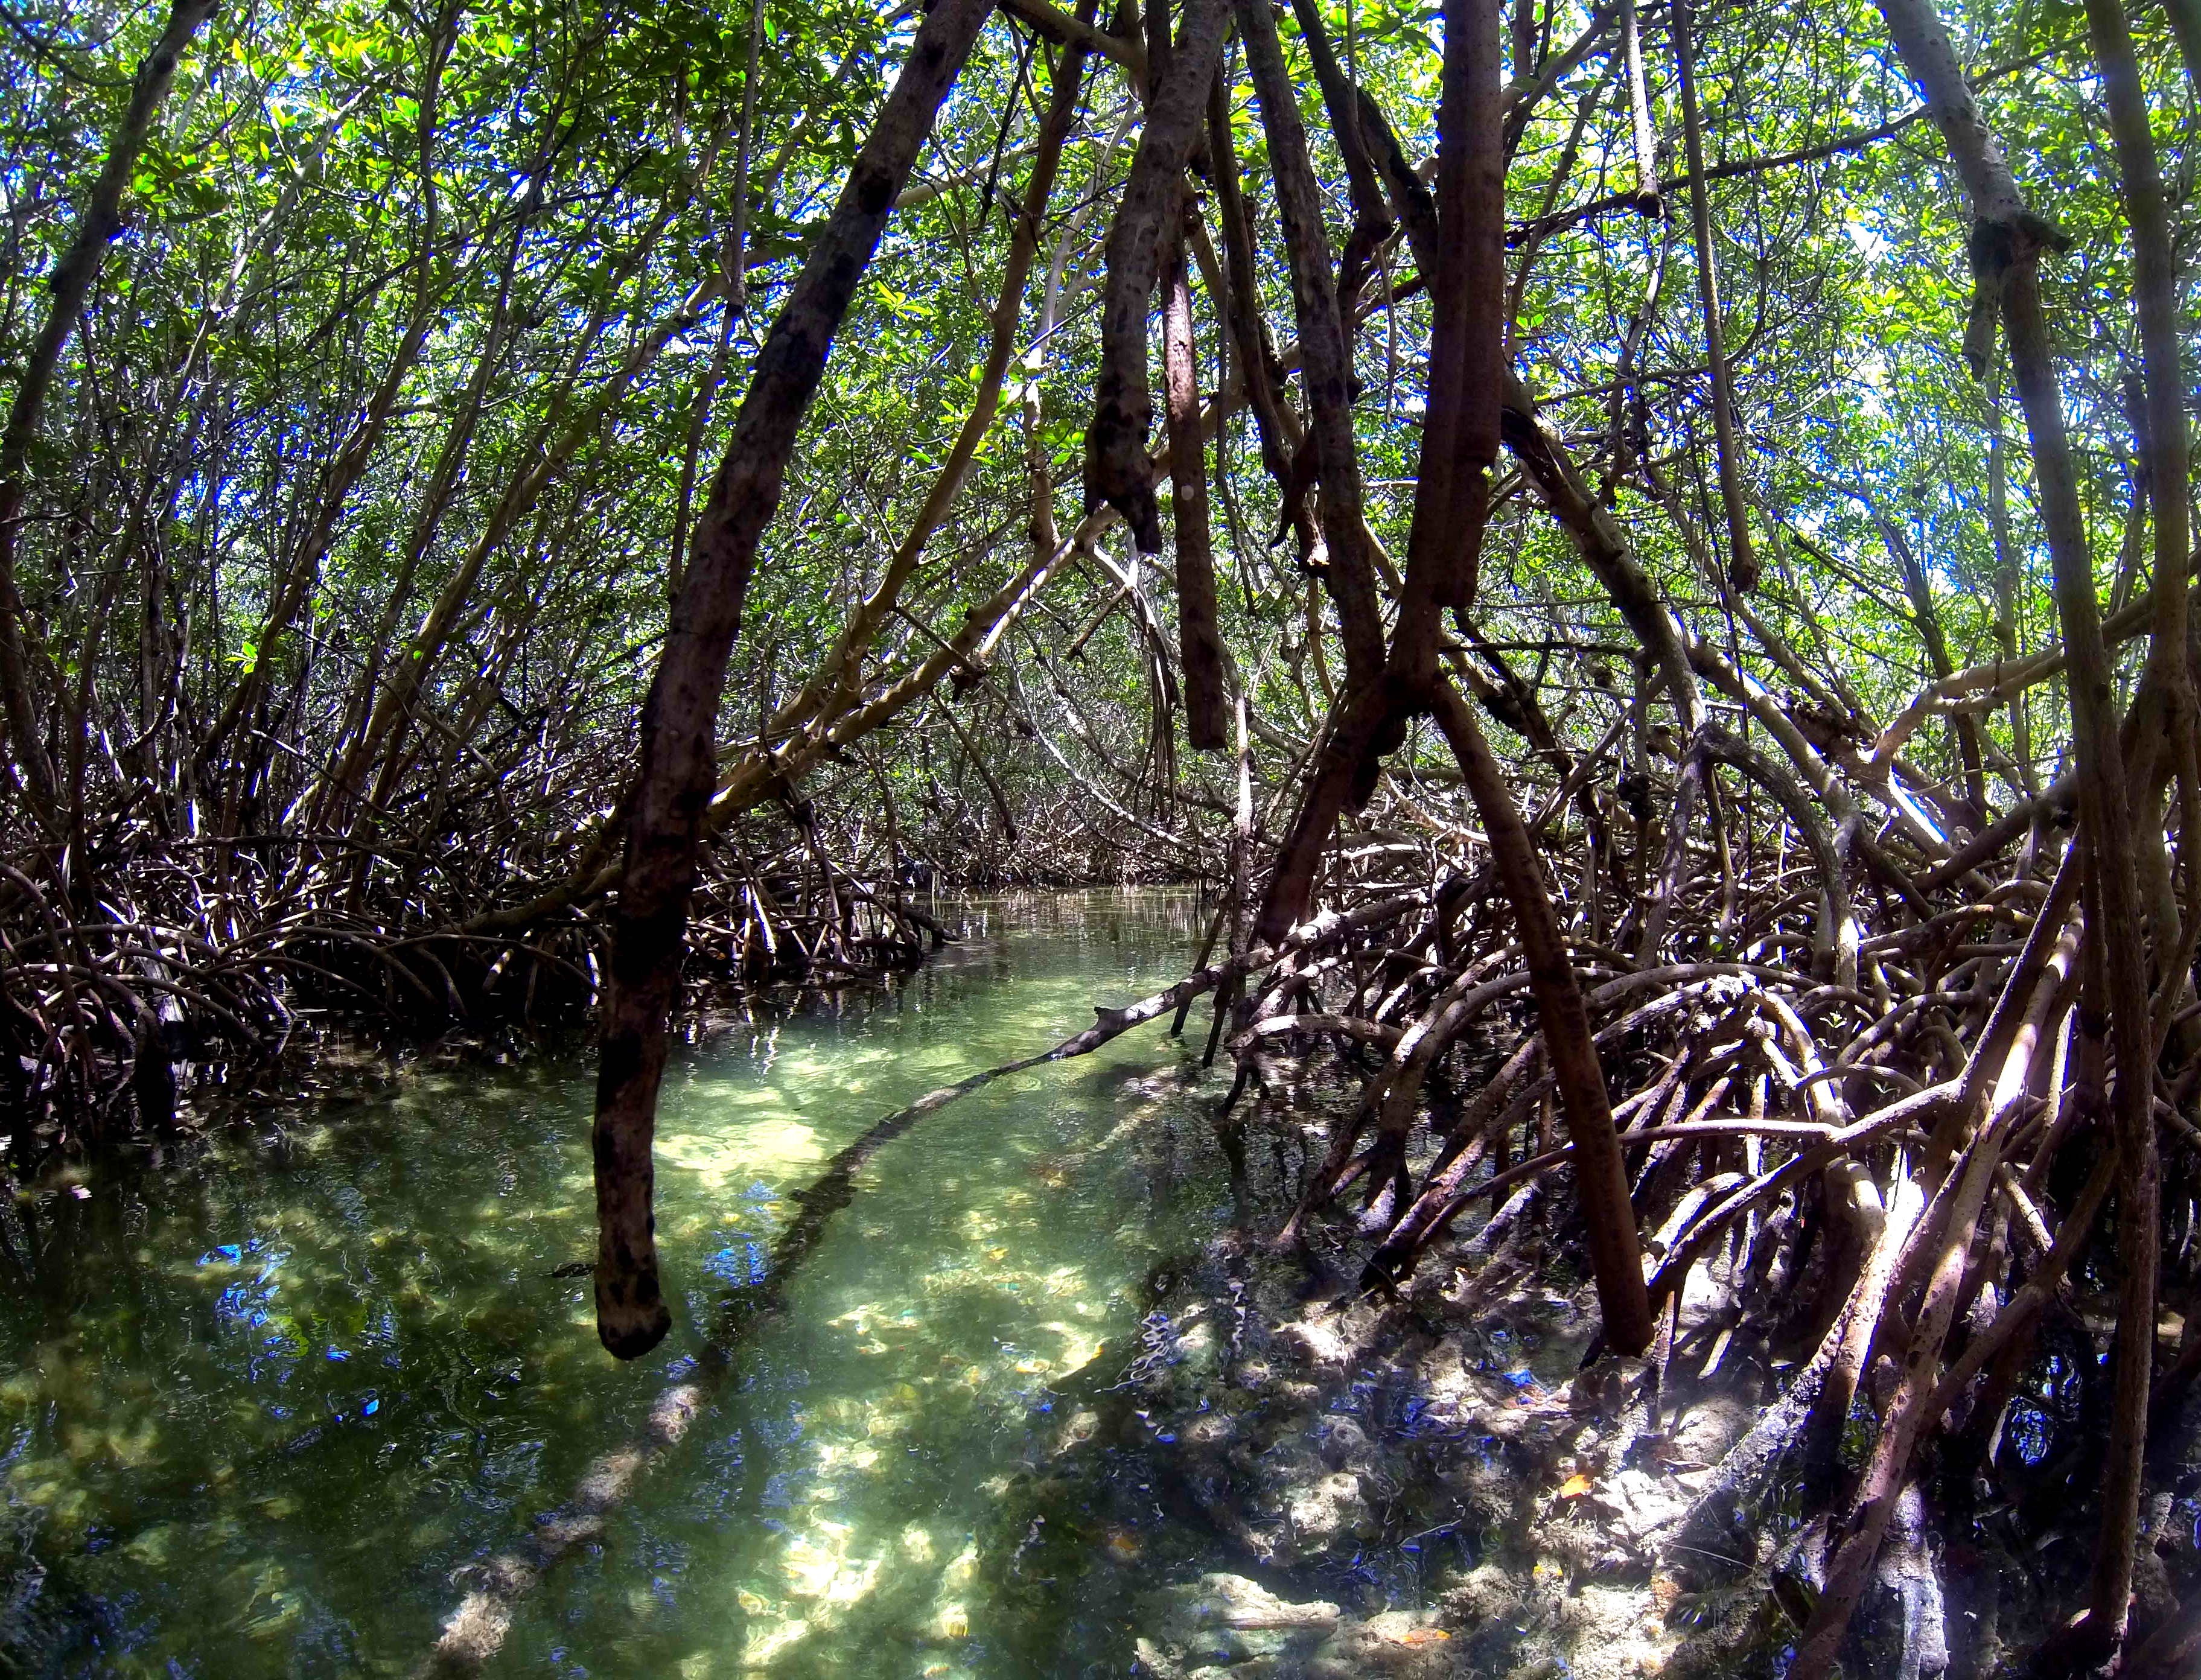 a hidden mangrove tunnel winds through the backcountry of the Florida keys